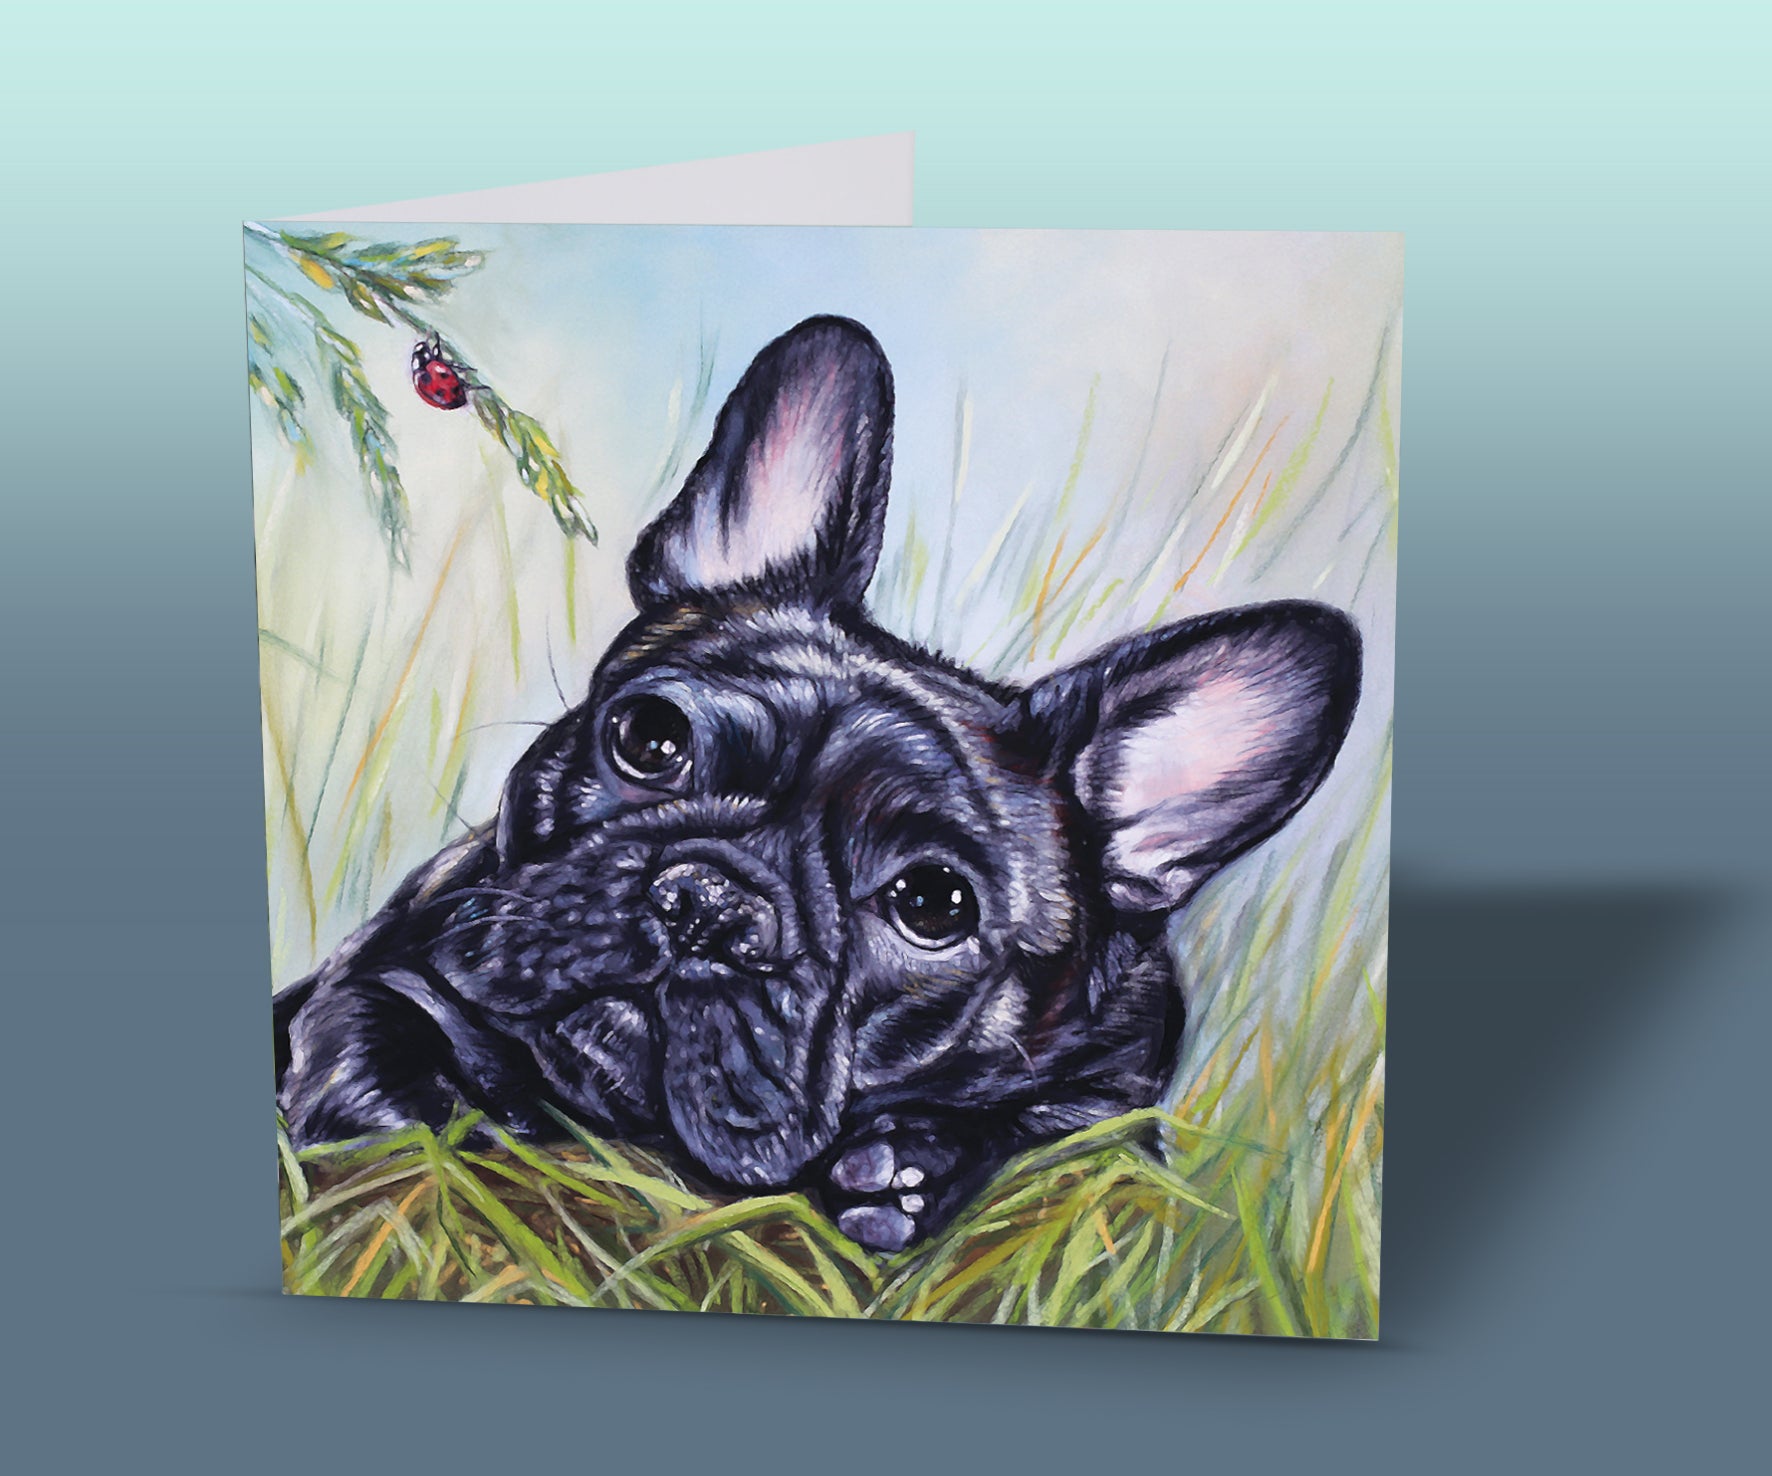 French Bulldog greeting card